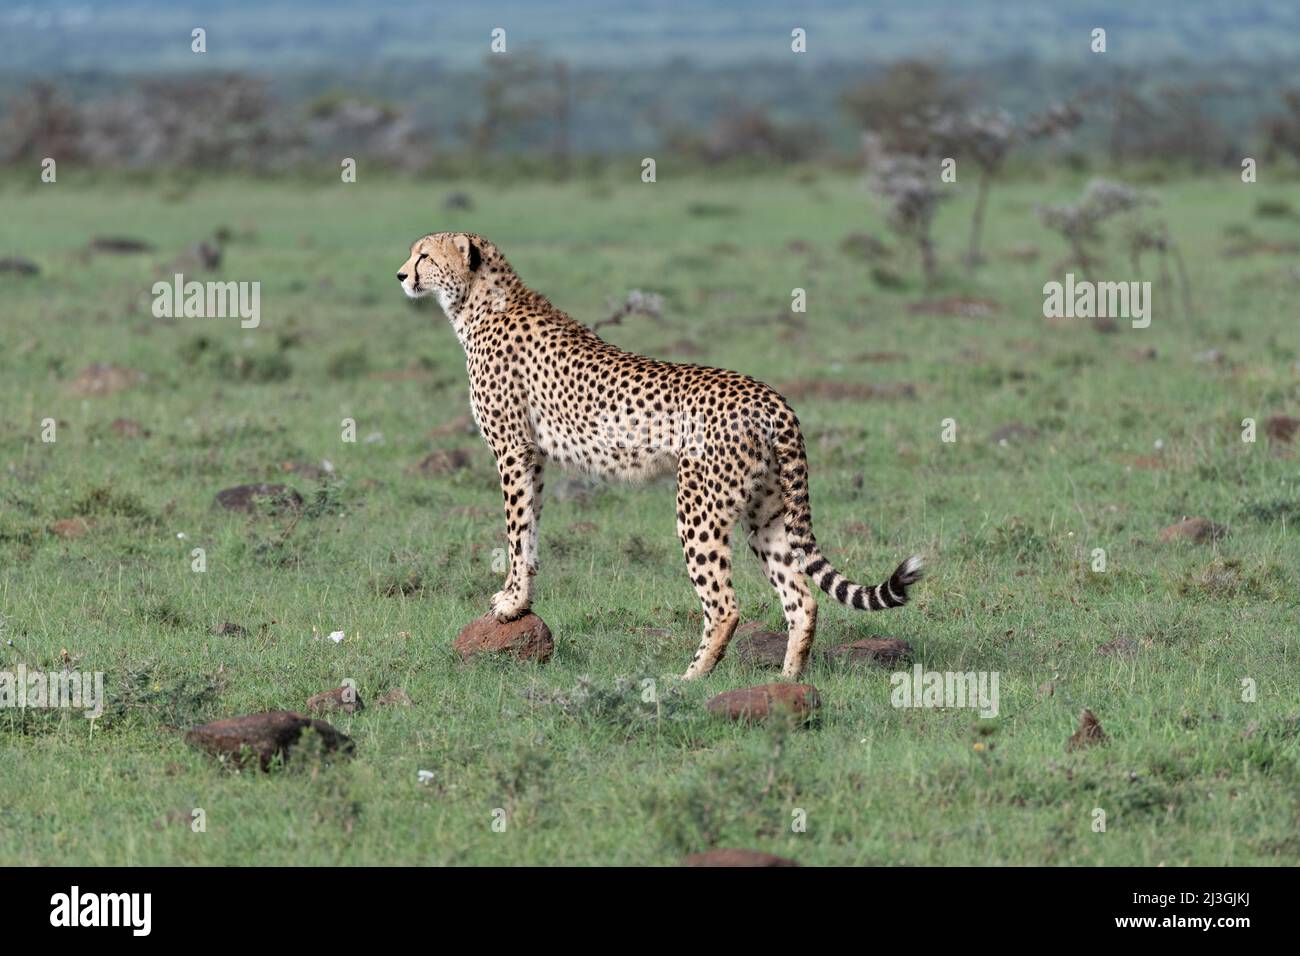 standing Cheetah surveying its territory Stock Photo